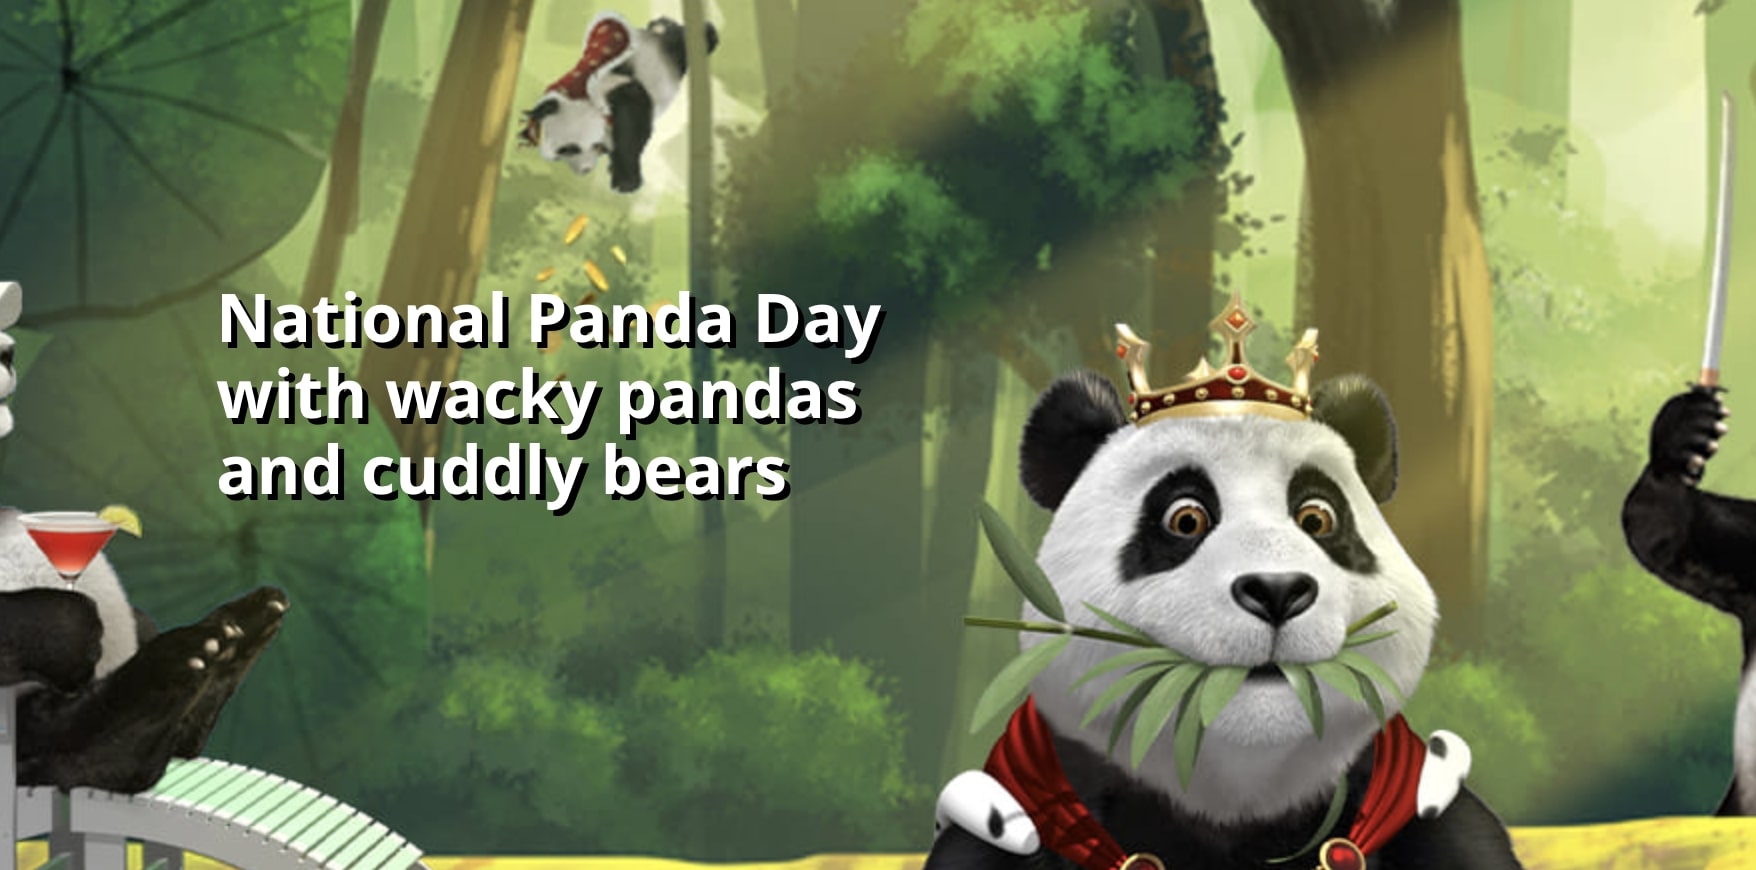 National Panda Day Celebration at Royal Panda Casino